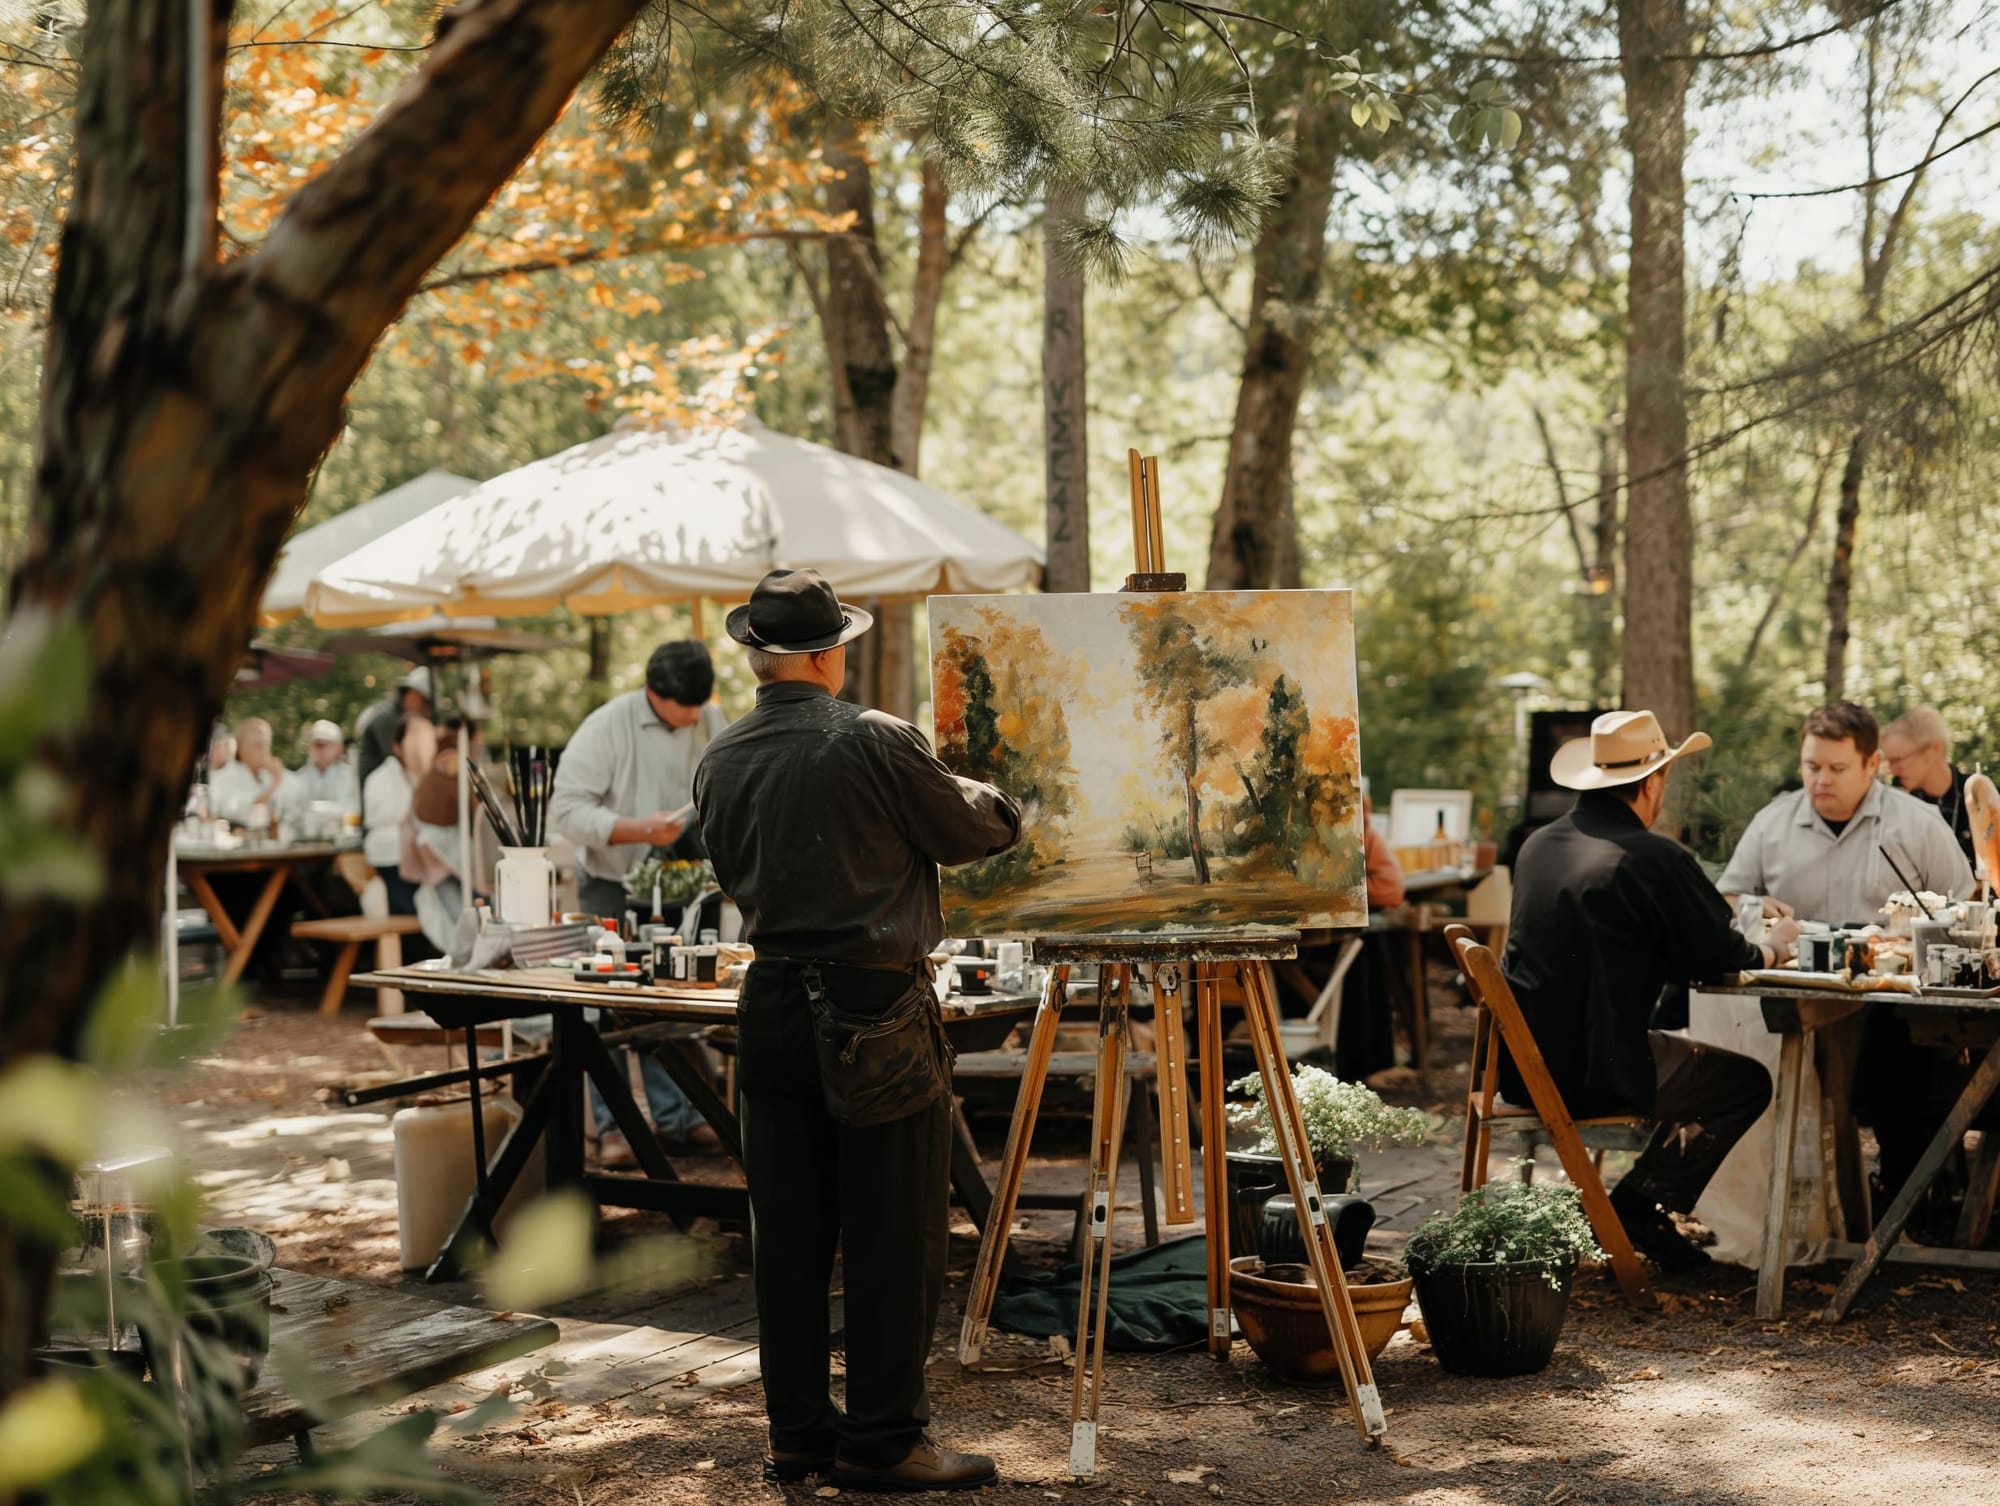 An artsy garden wedding setup with a painter 